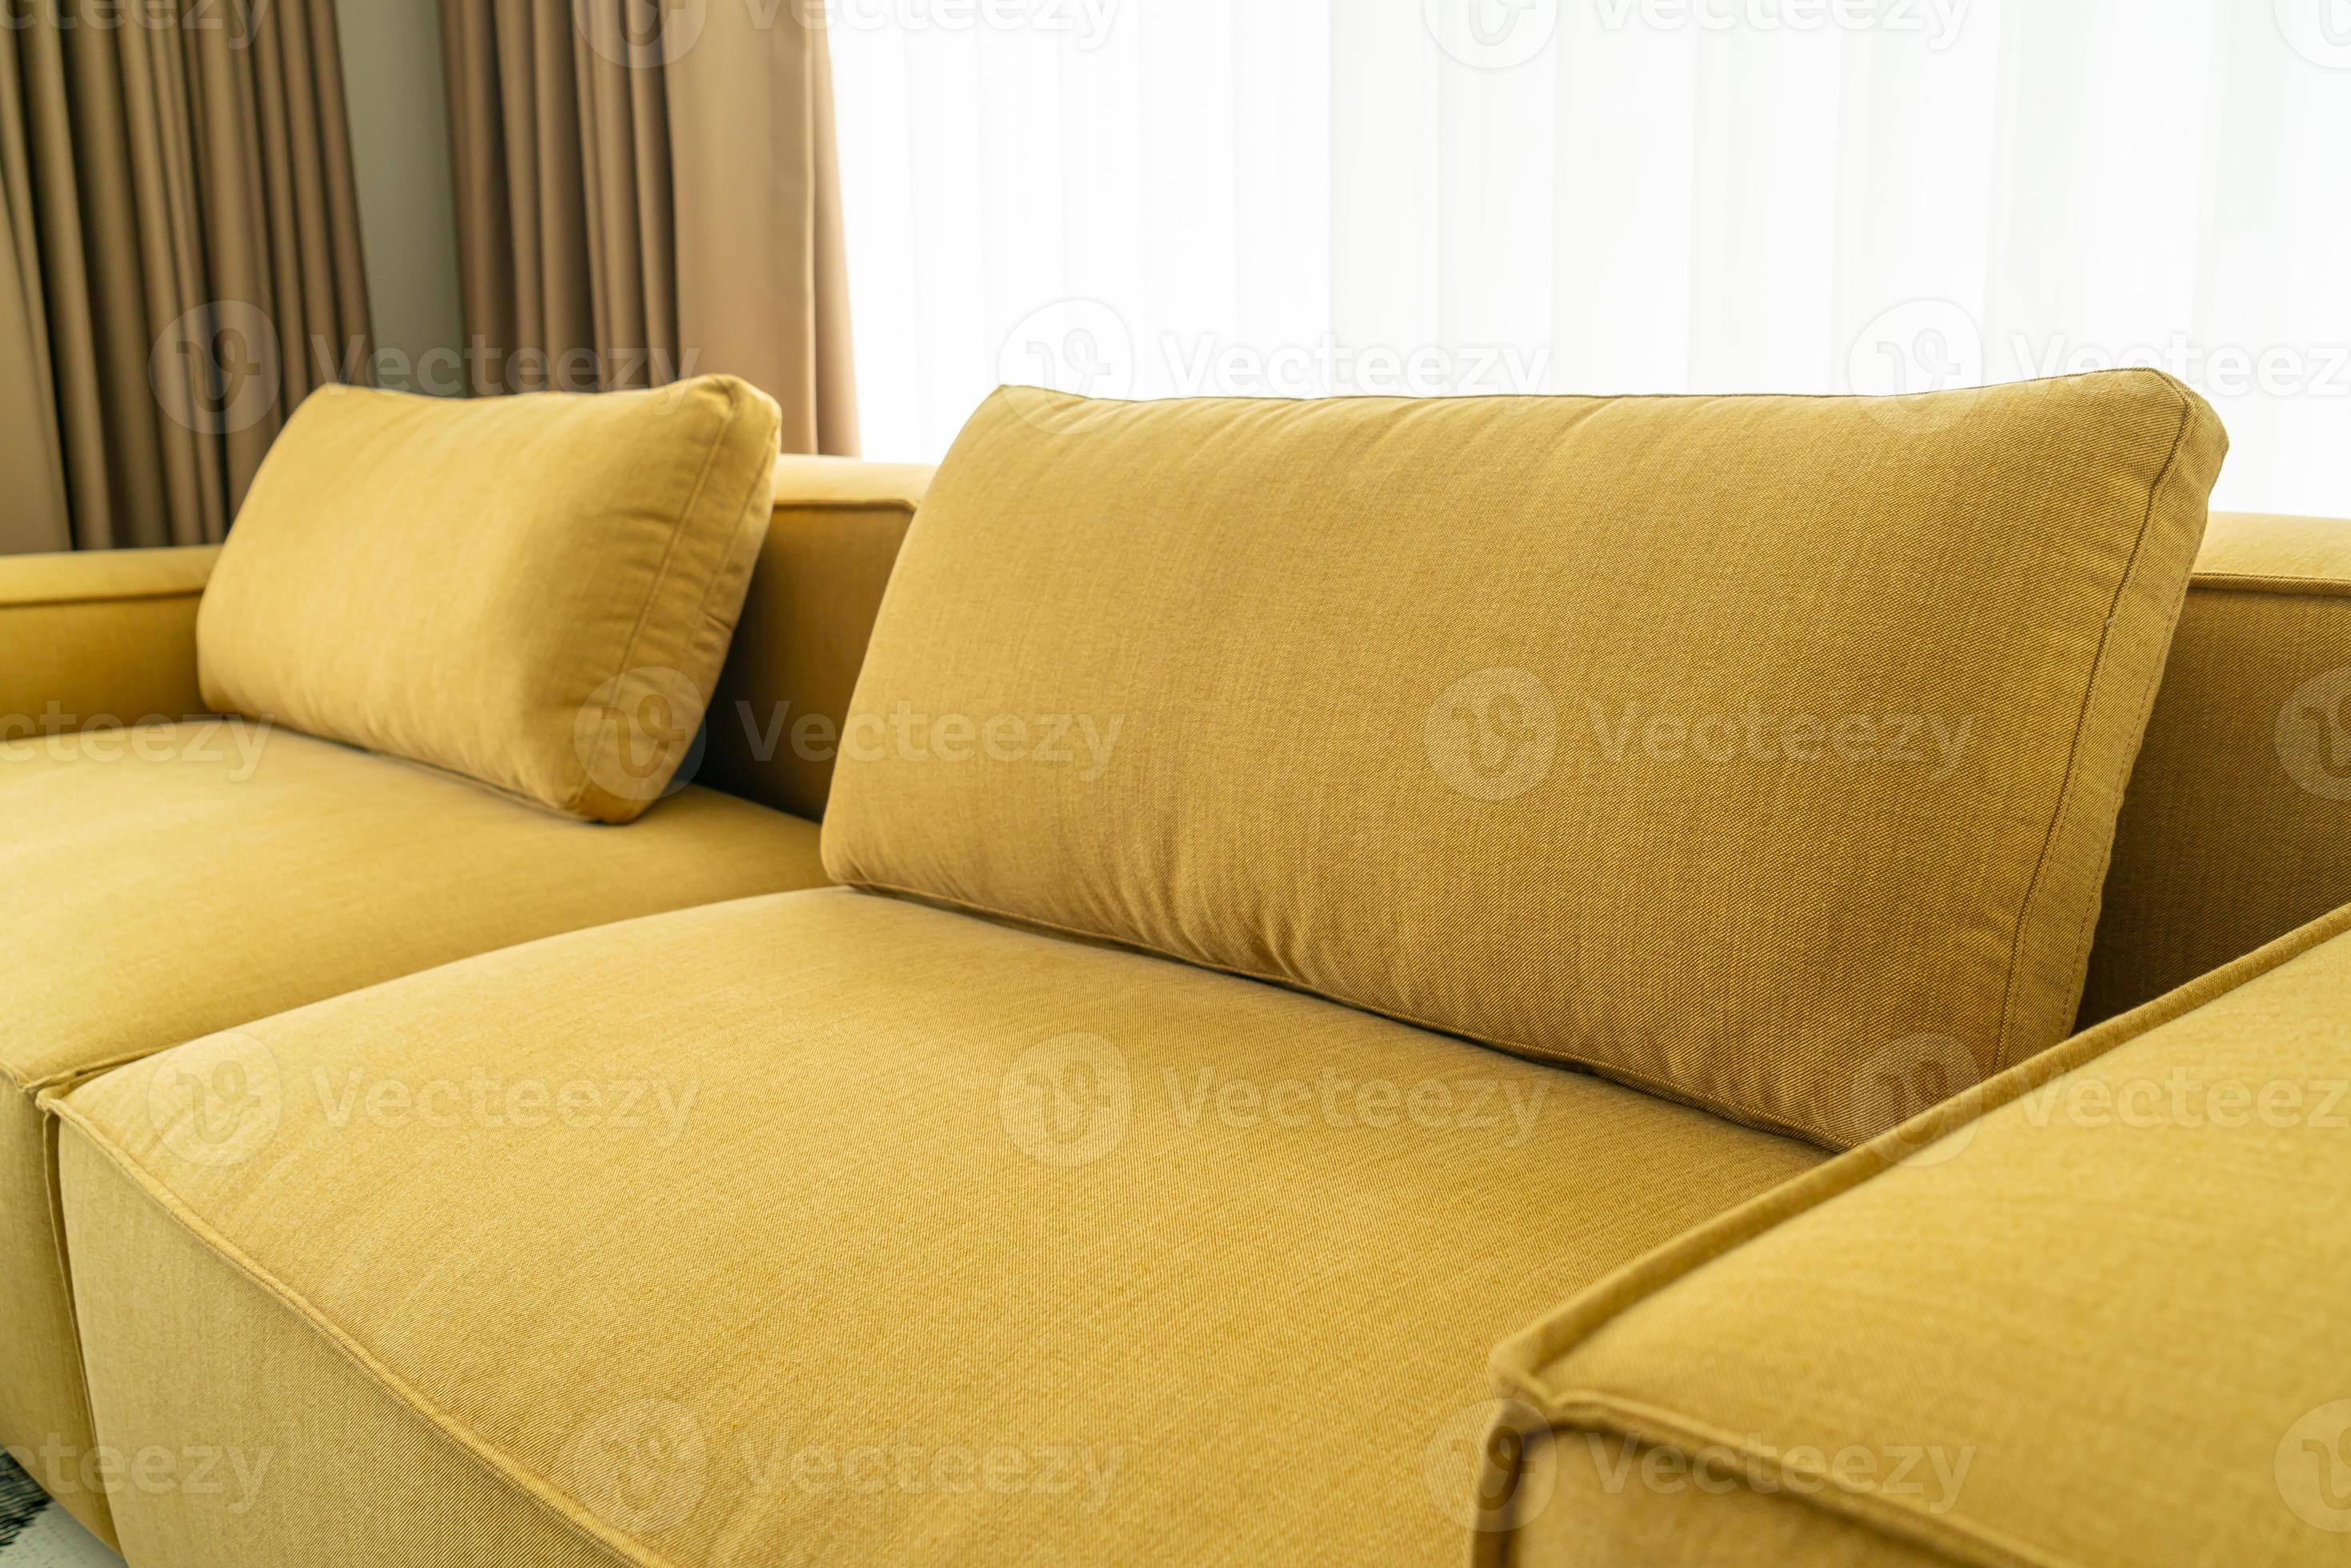 lege gele stoffen bankdecoratie interieur in de woonkamer thuis 3010340